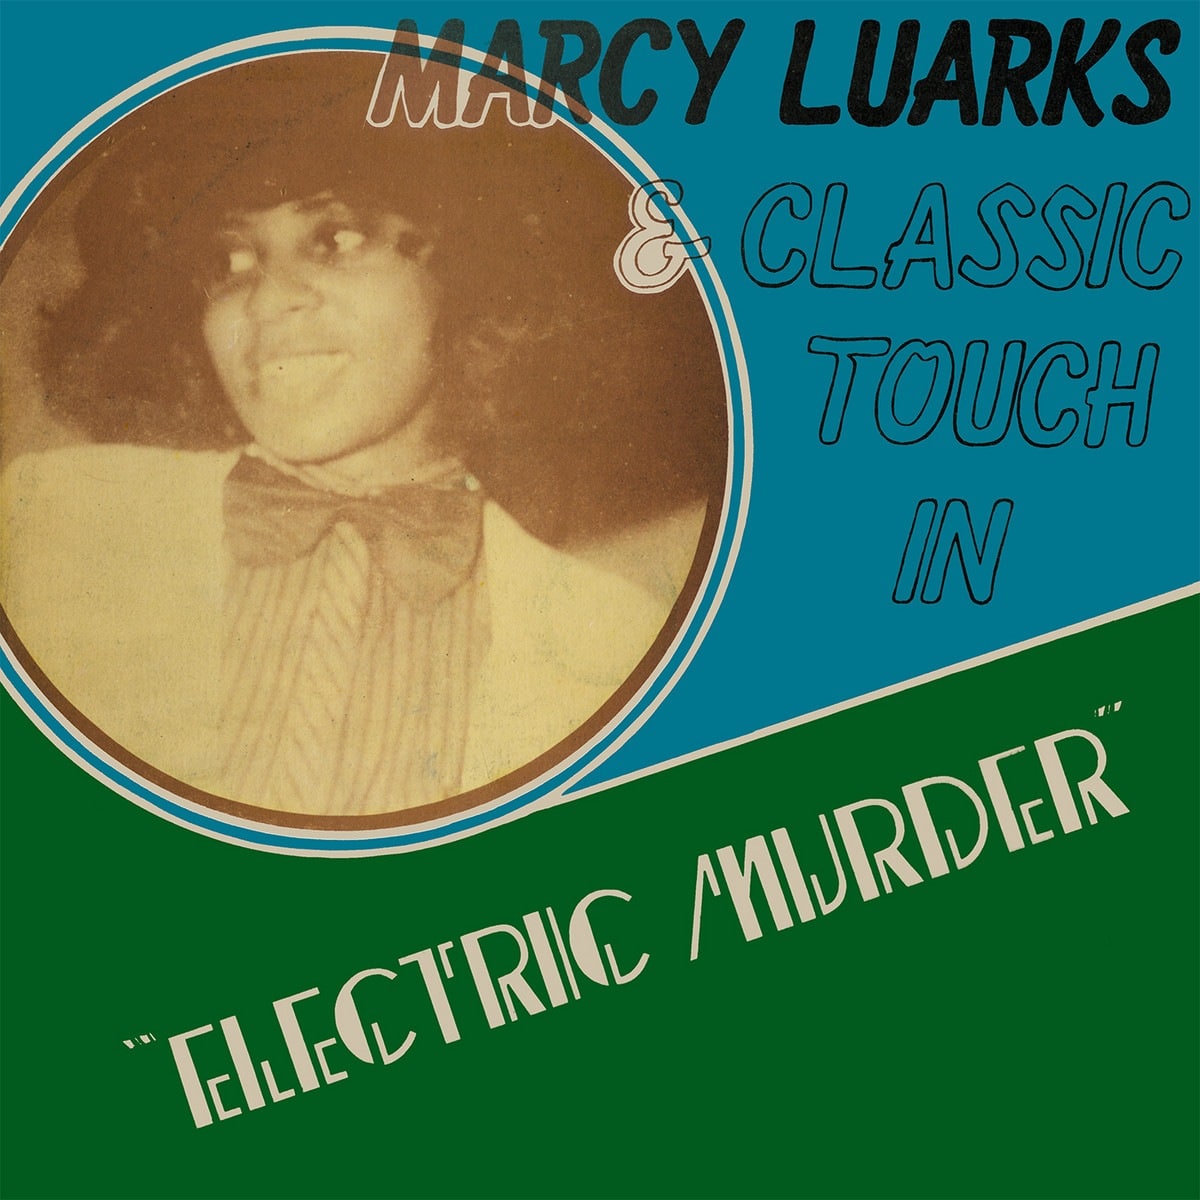 Marcy Luarks/Classic Touch - Electric Murder - KALITALP005 - KALITA